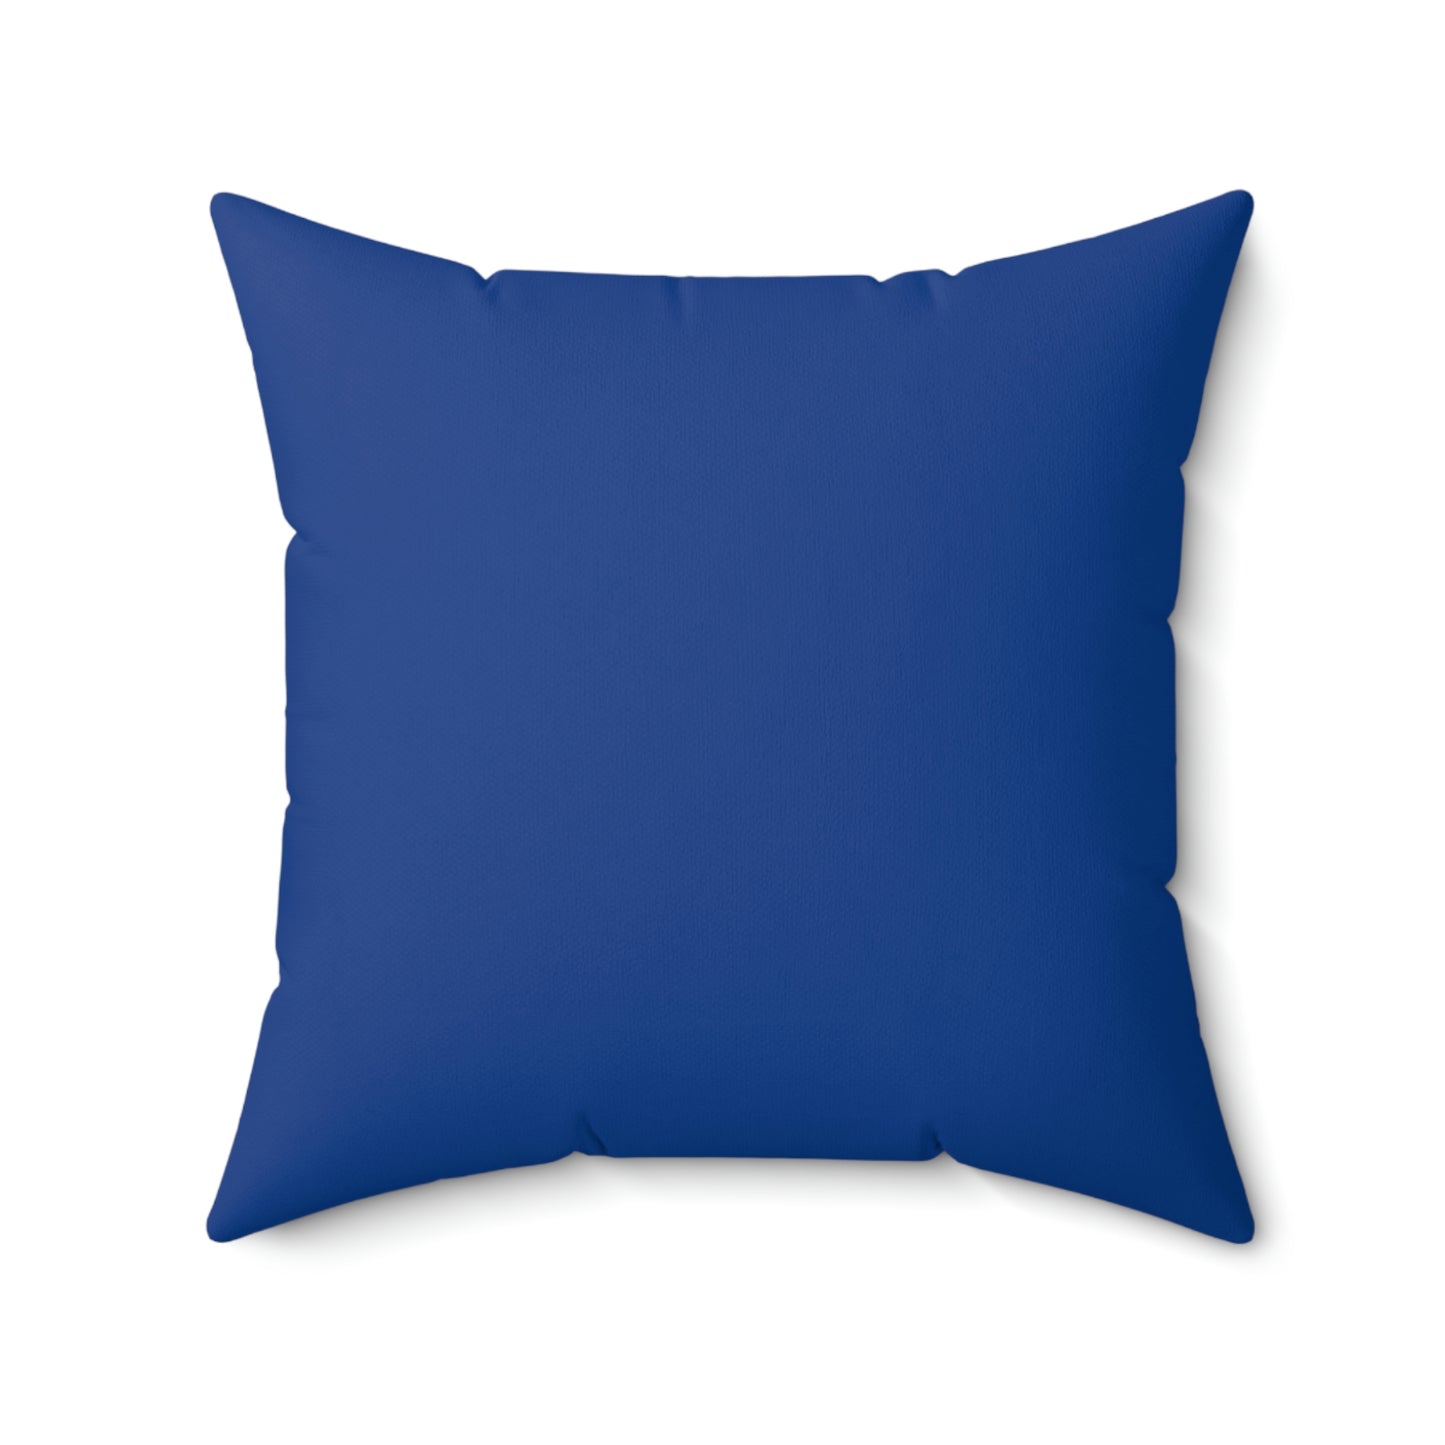 Spun Polyester Square Pillow Case “Pooh on Dark Blue”